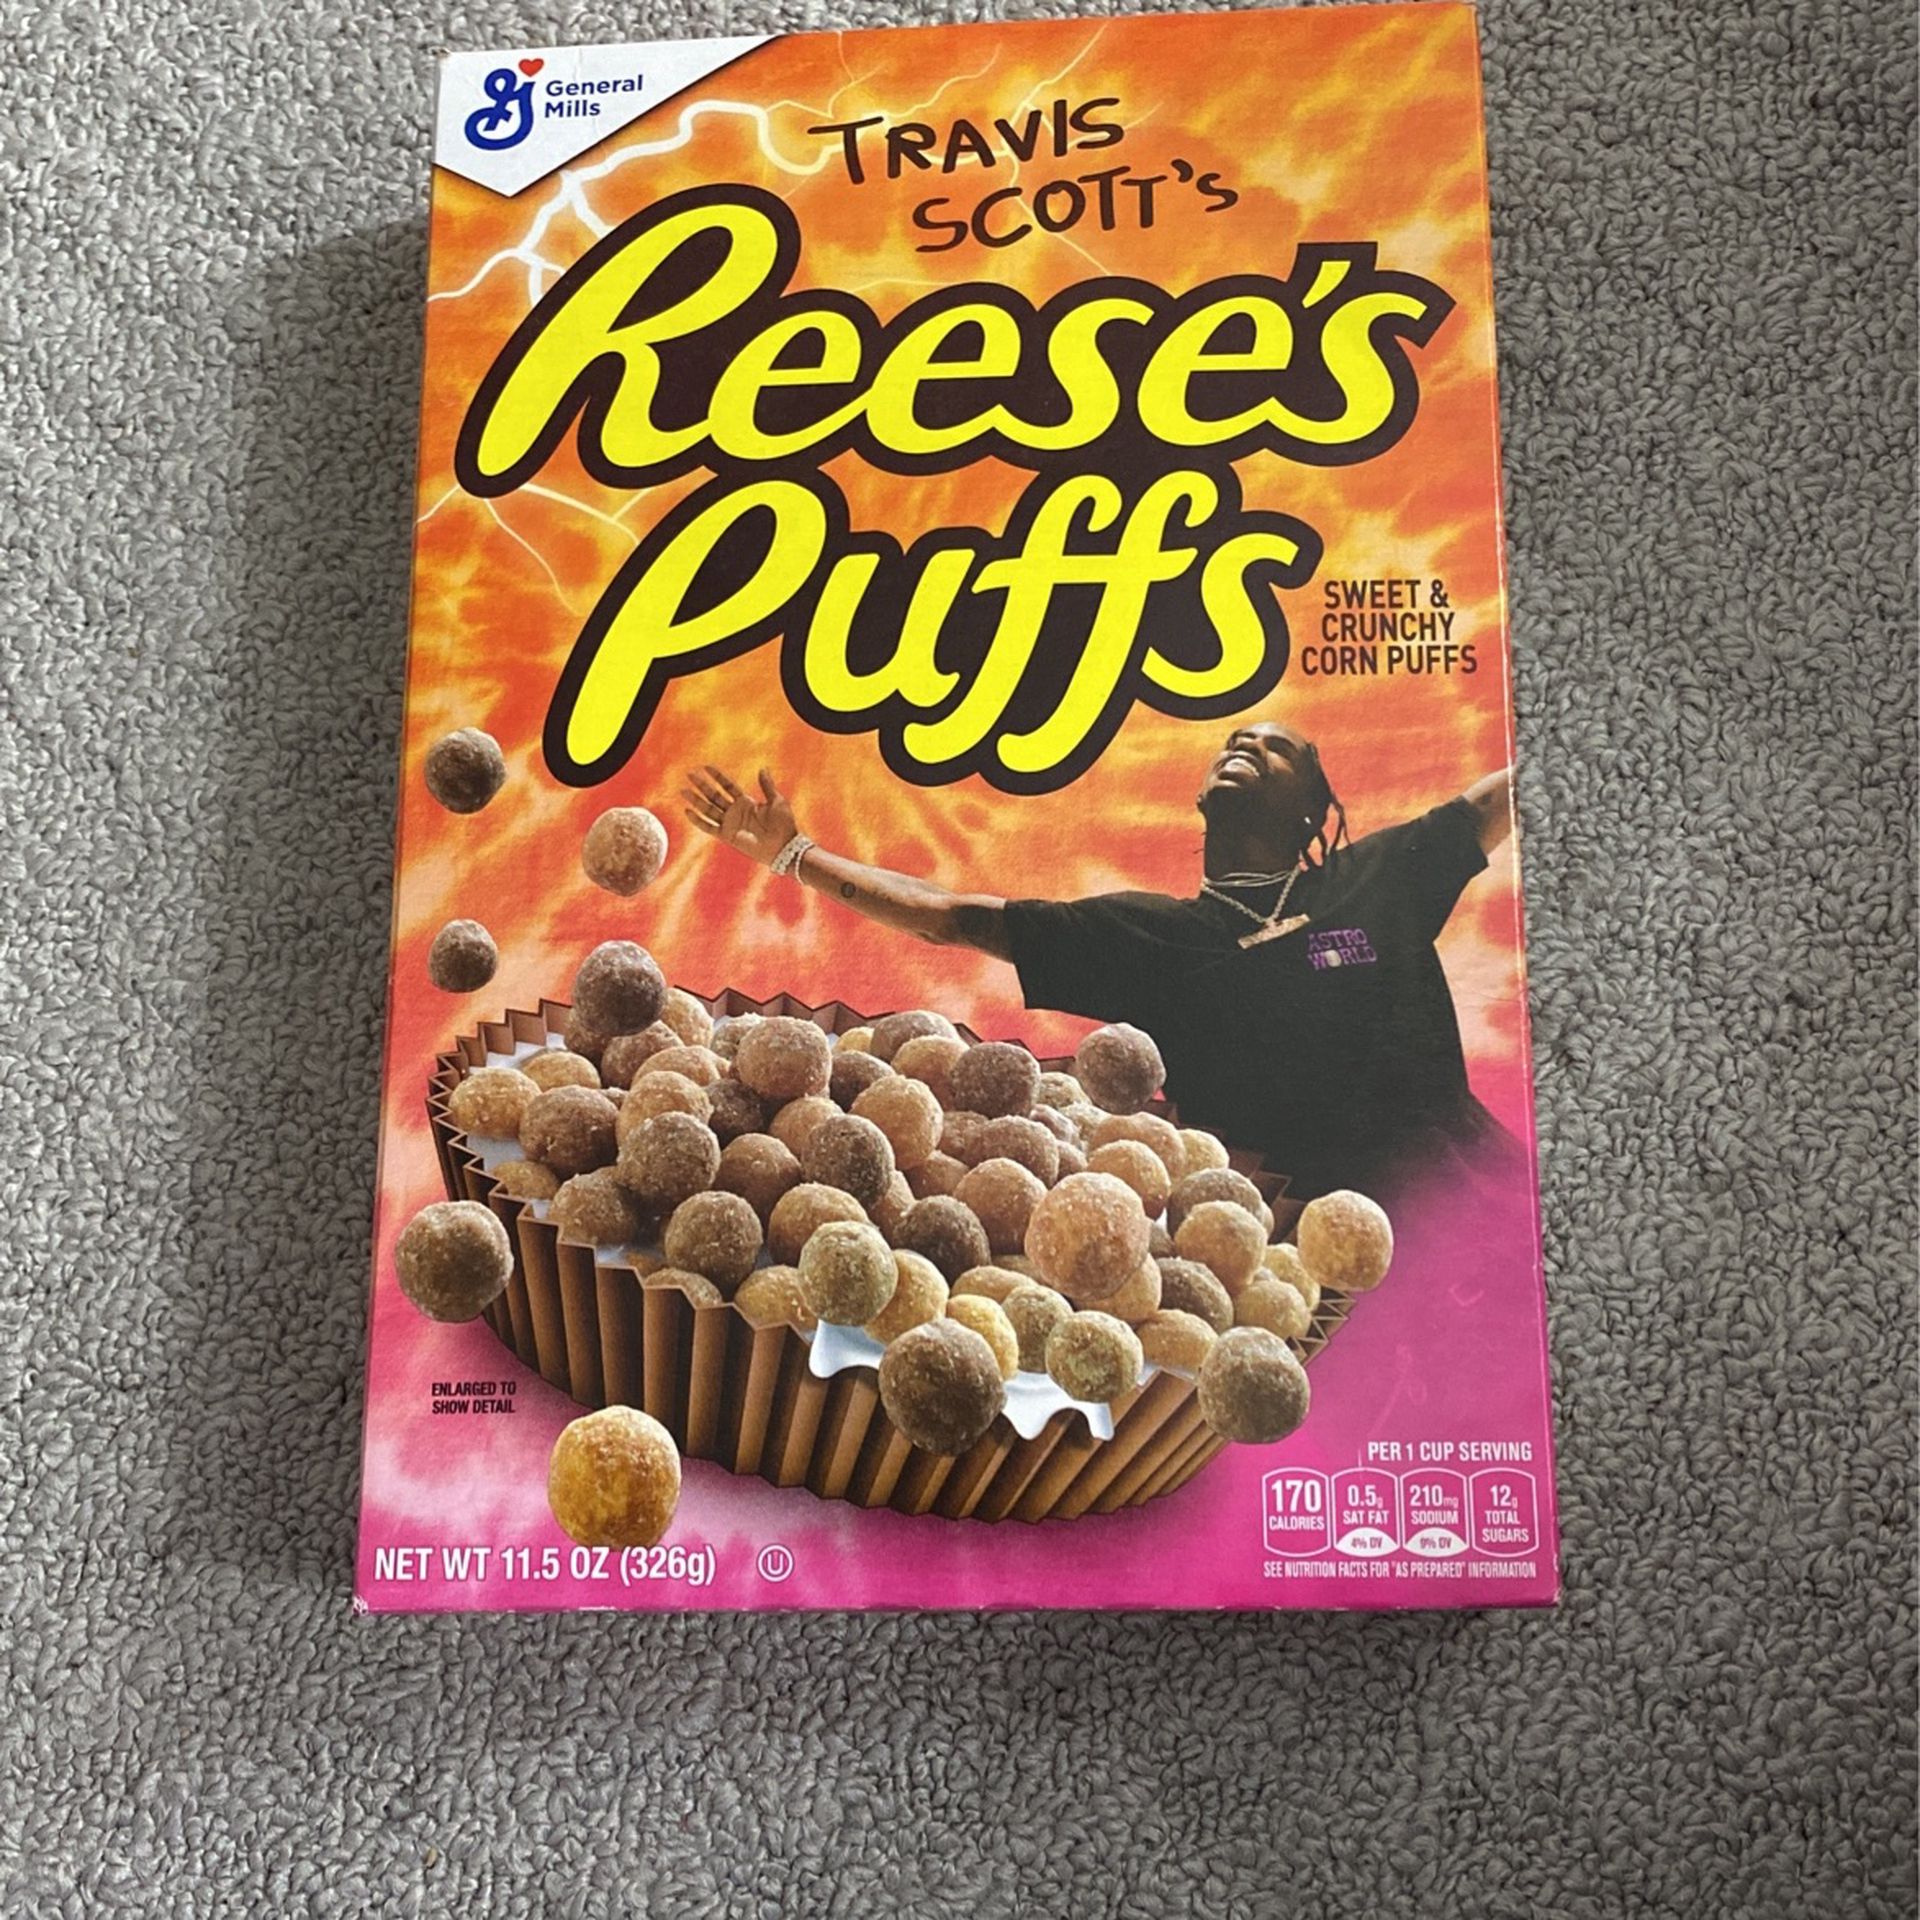 Travis scott (opened cereal box)